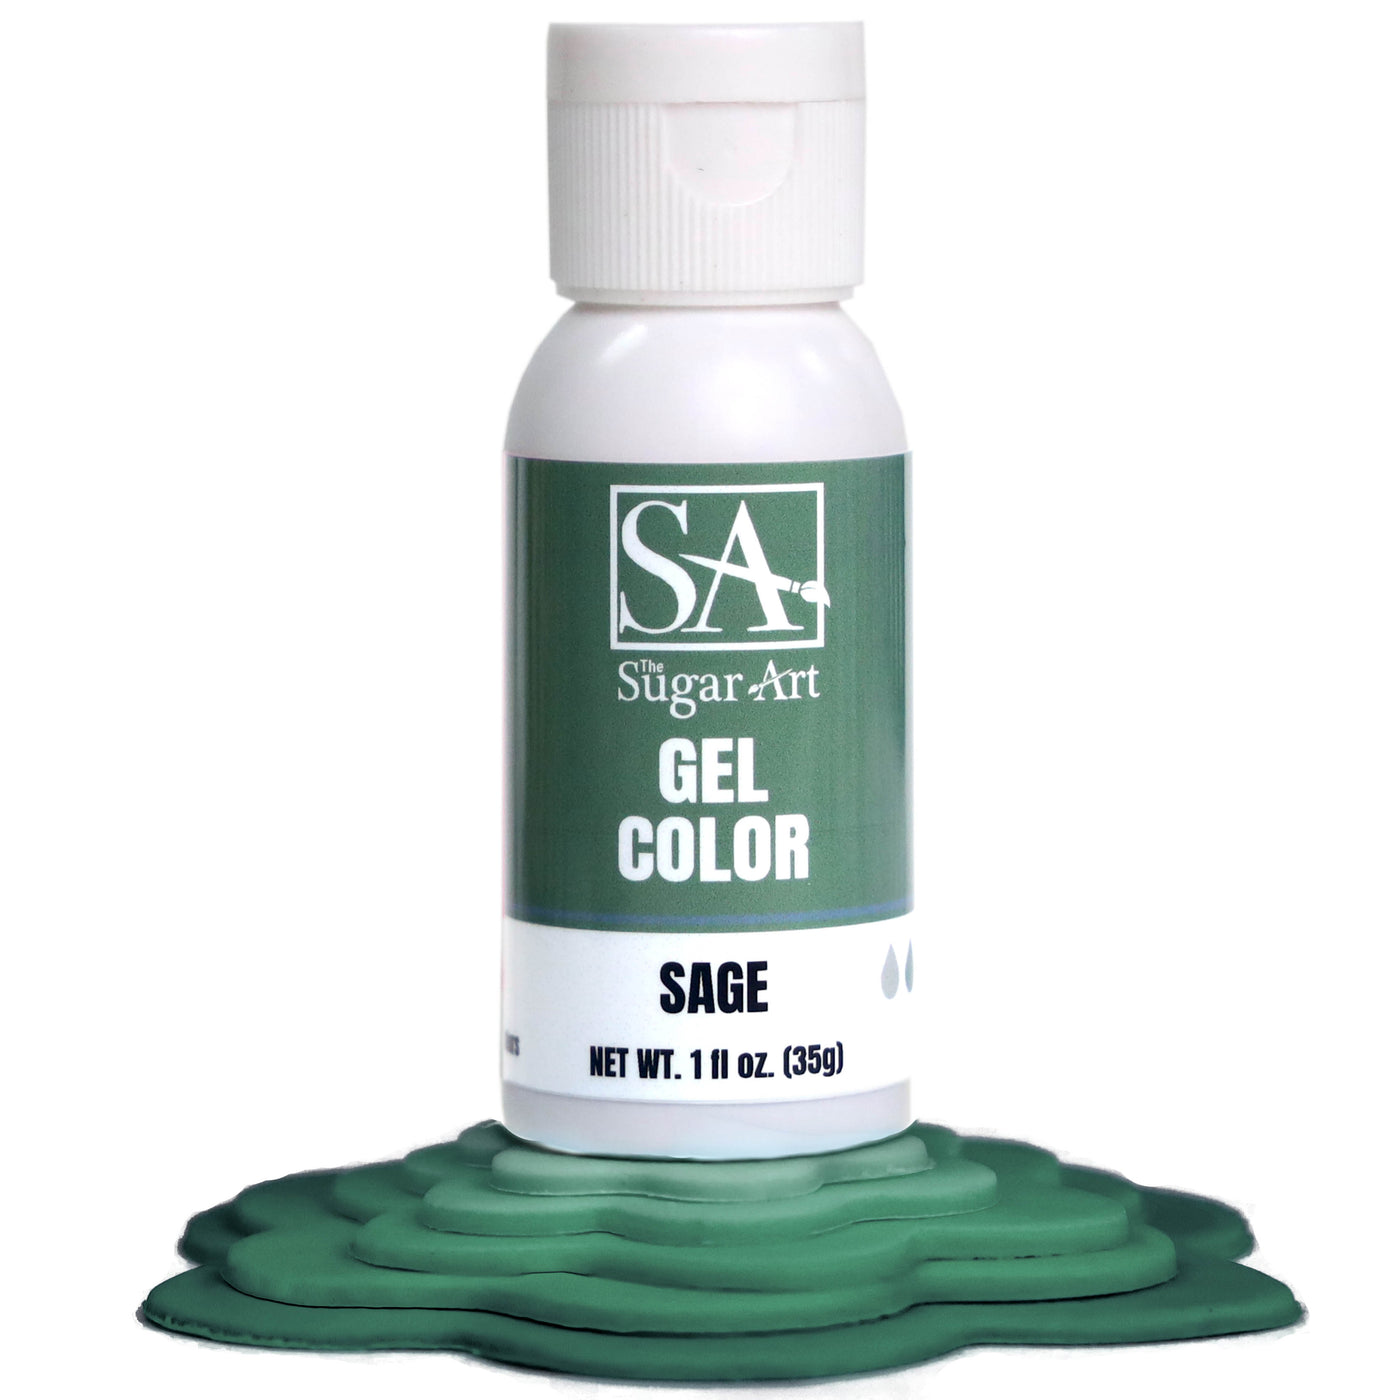 Sage Gel Color - The Sugar Art, Inc.